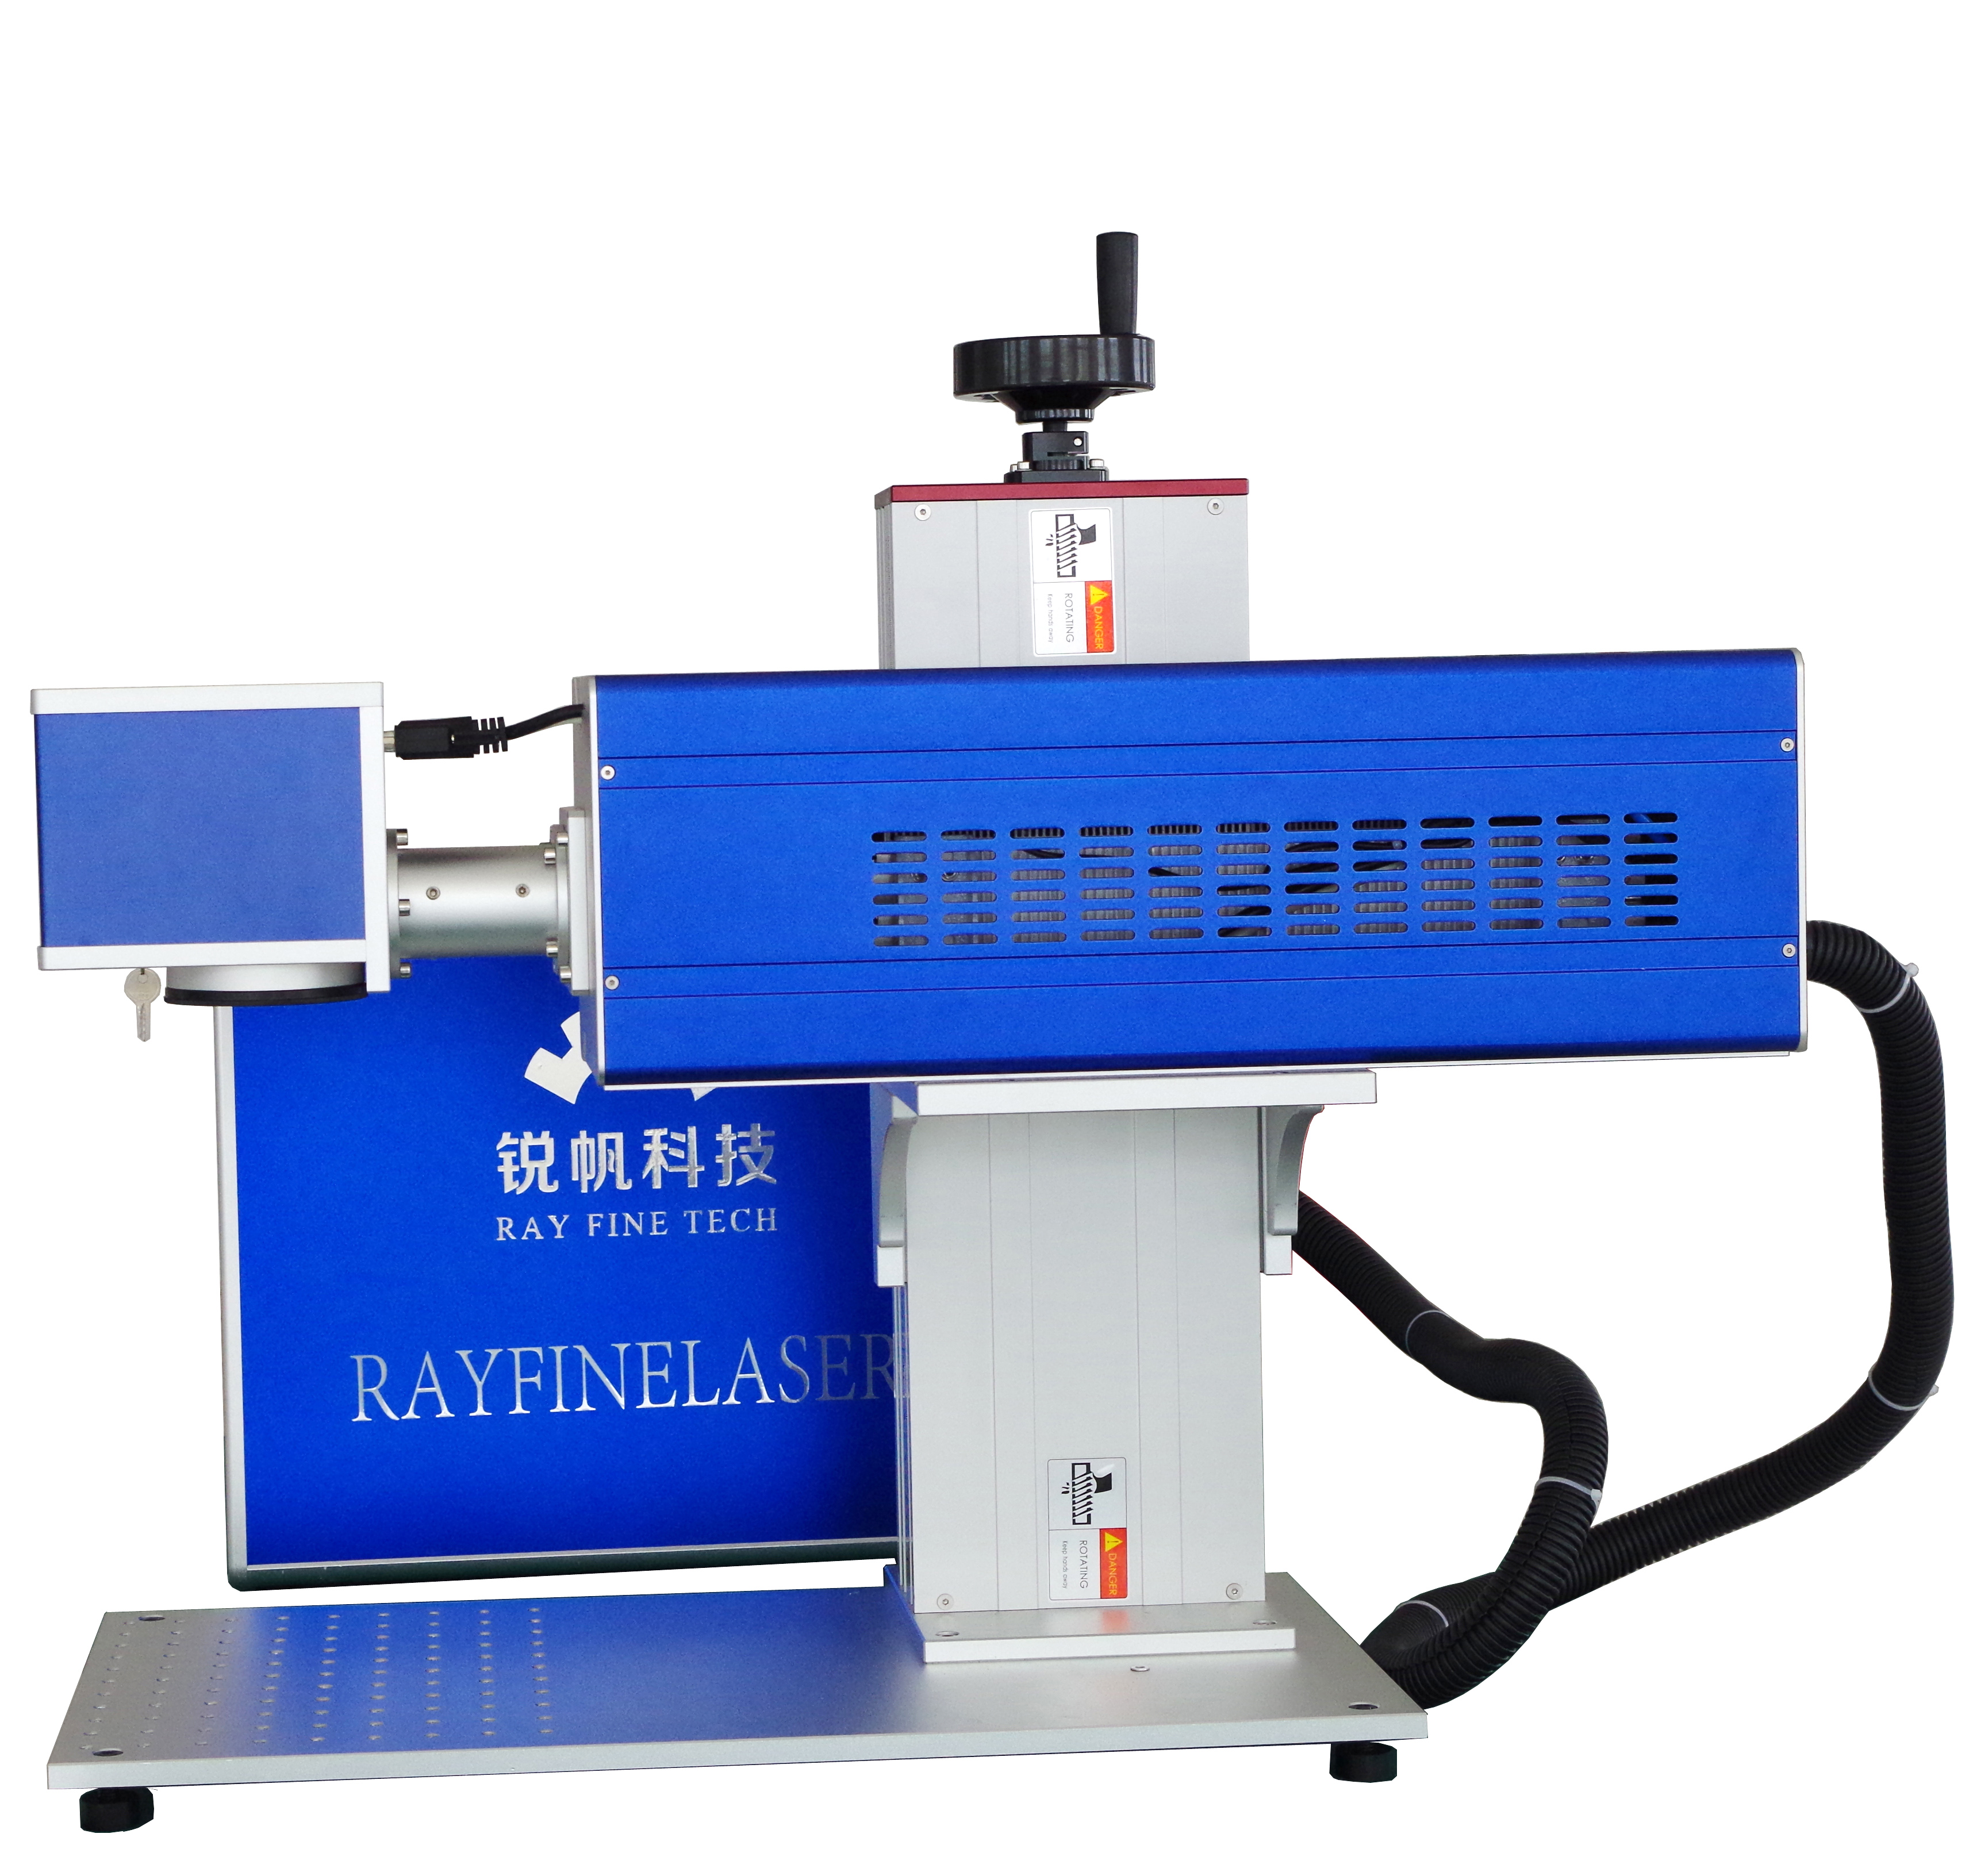 Coherente Synrad 30W CO2 Galvo-lasermarkeermachine Niet-metalen lasergraveermachine